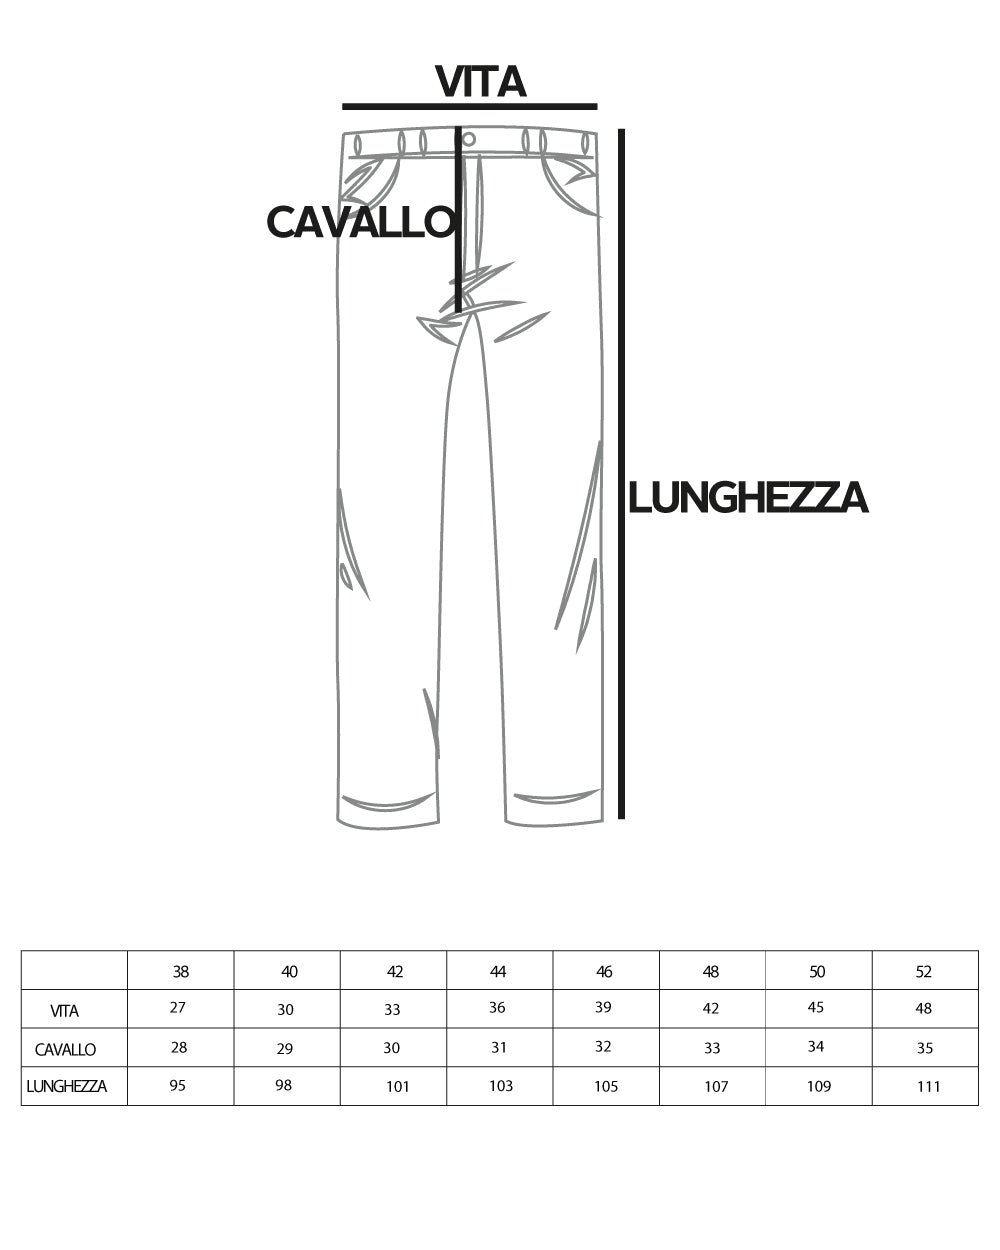 Men's Jeans Trousers Unisex Baggy Light Denim Pocket America Casual GIOSAL-P5756A